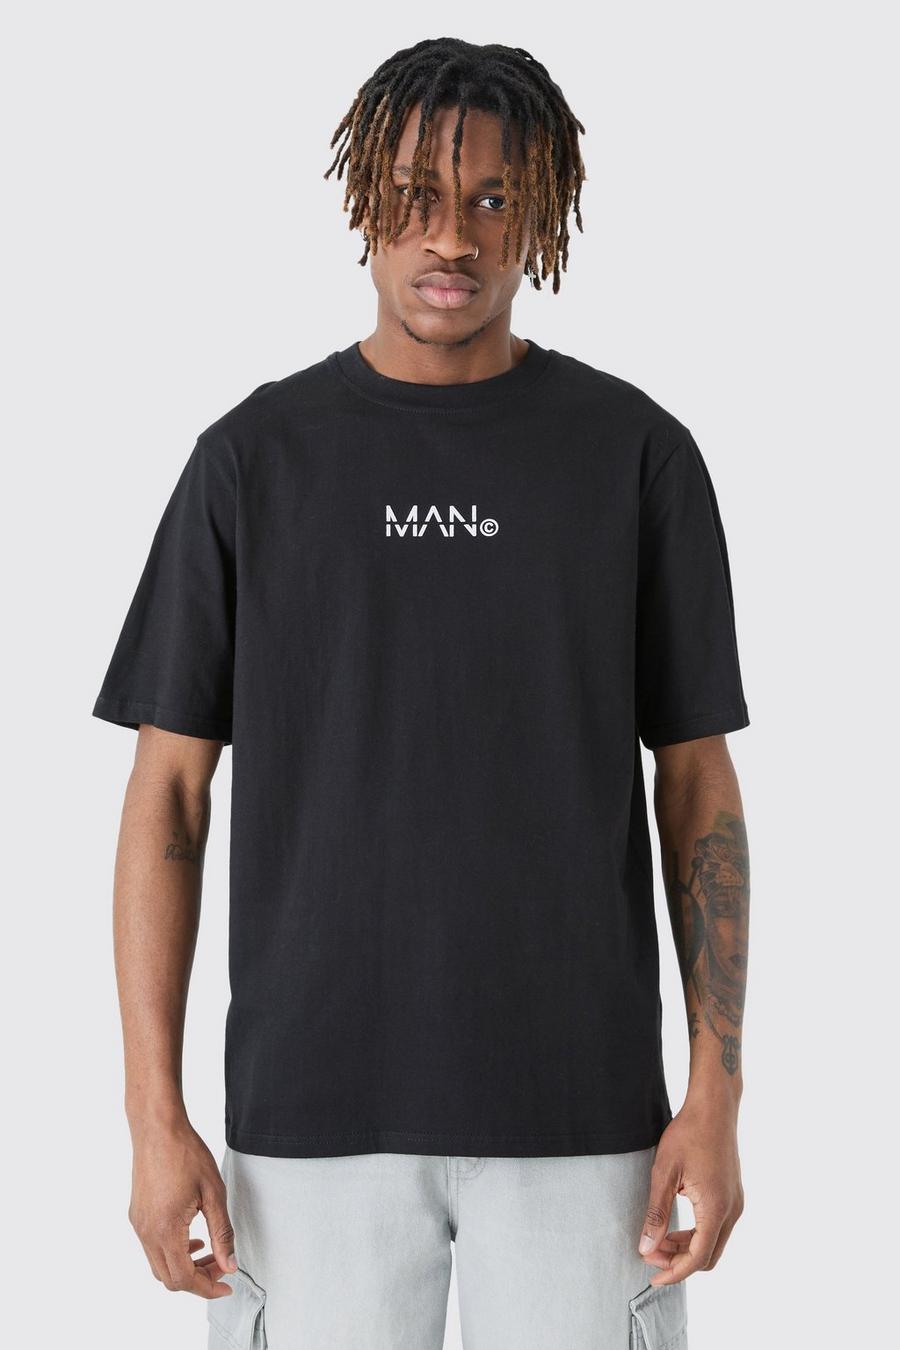 Camiseta Tall MAN Original, Black